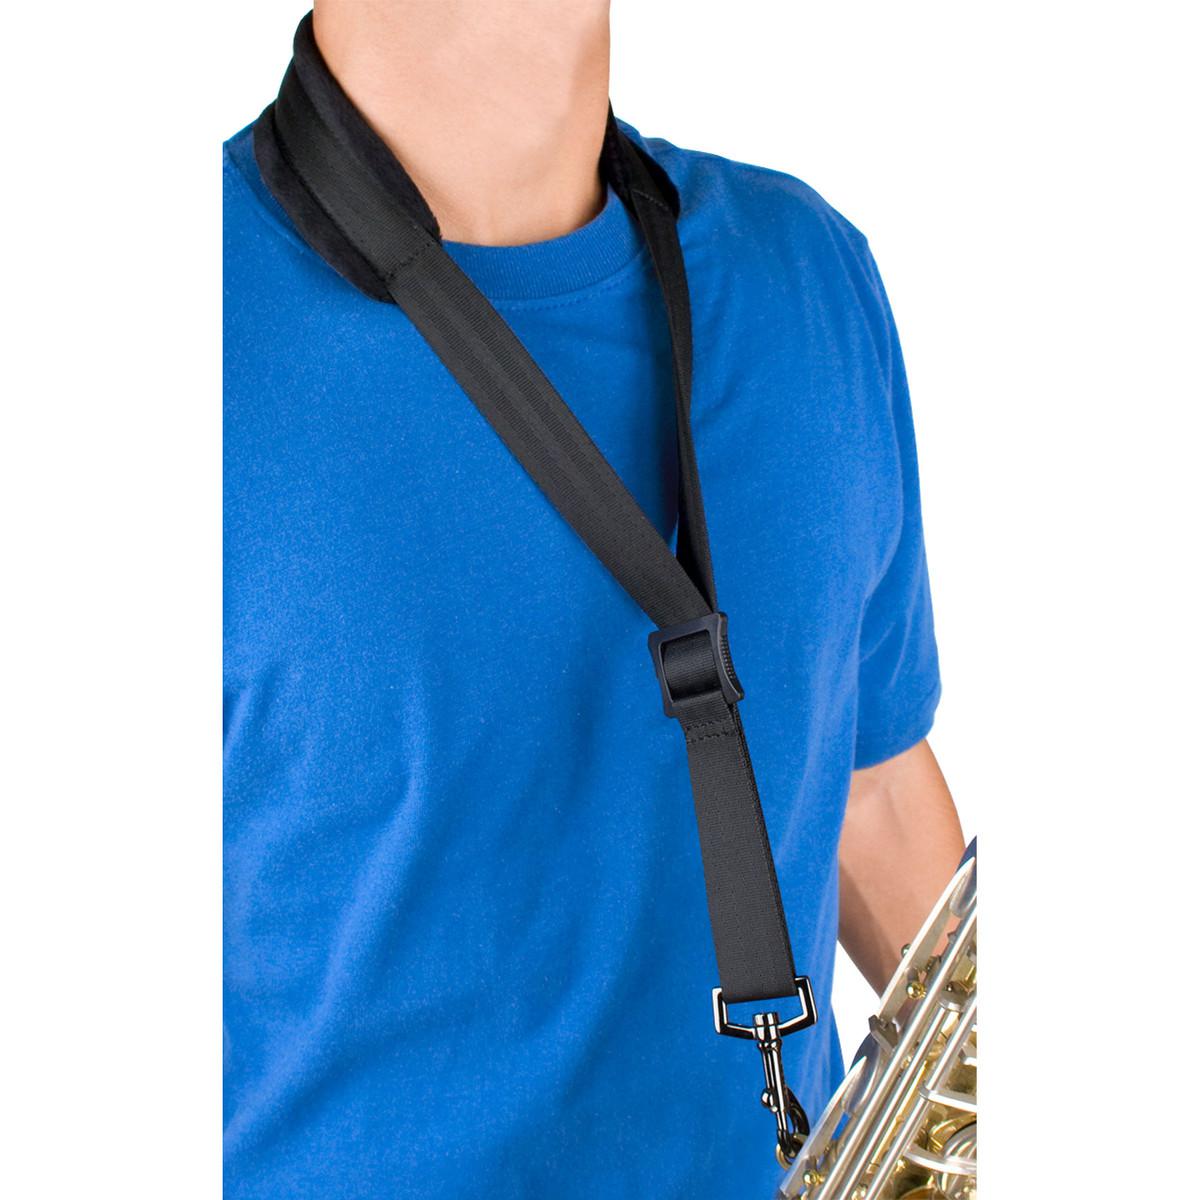 Confort saxophone strap